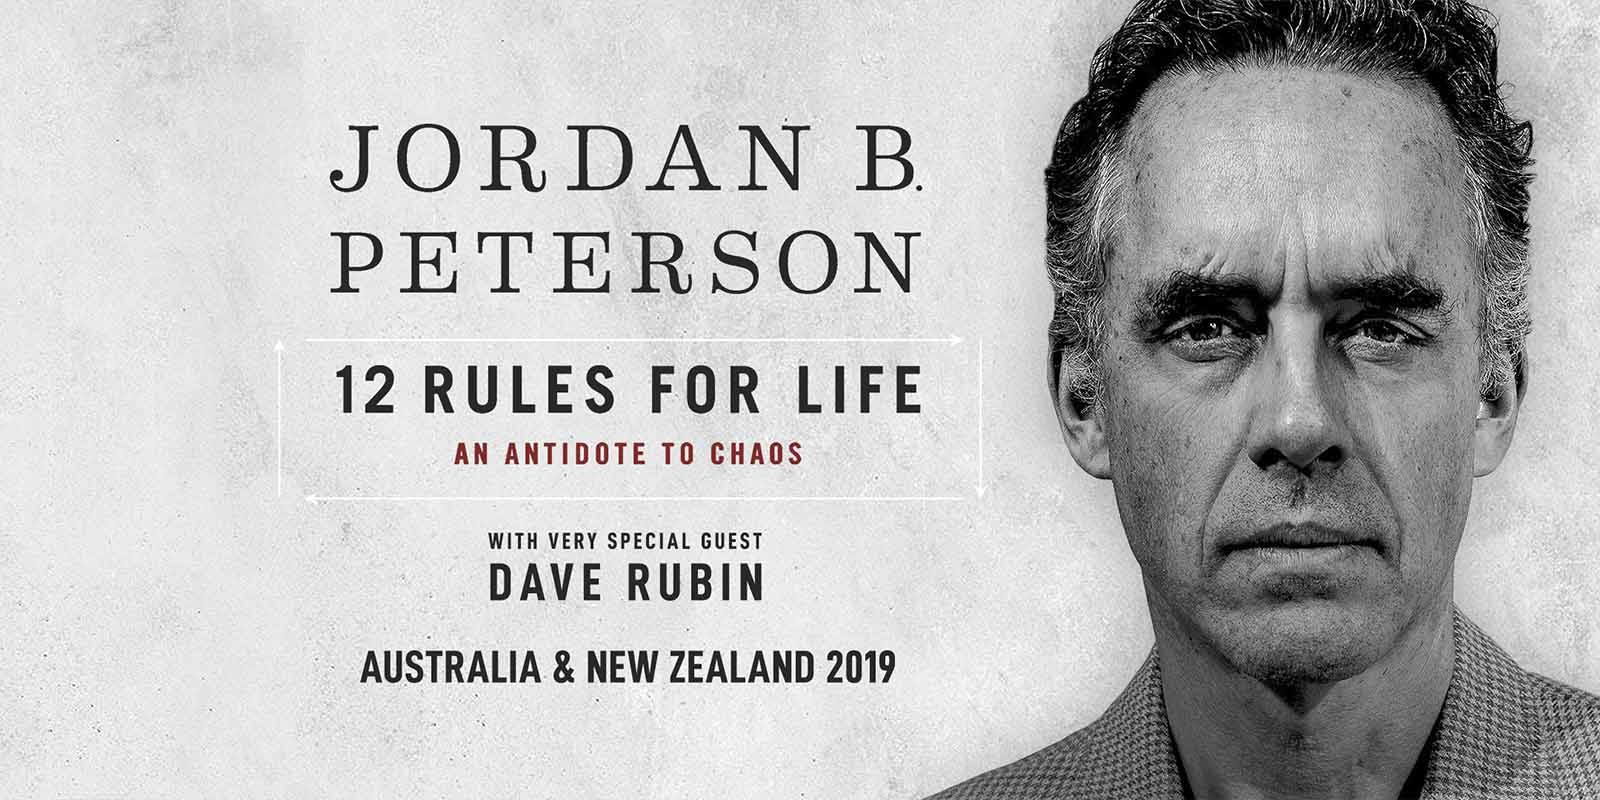  Jordan B. Peterson: books, biography, latest update